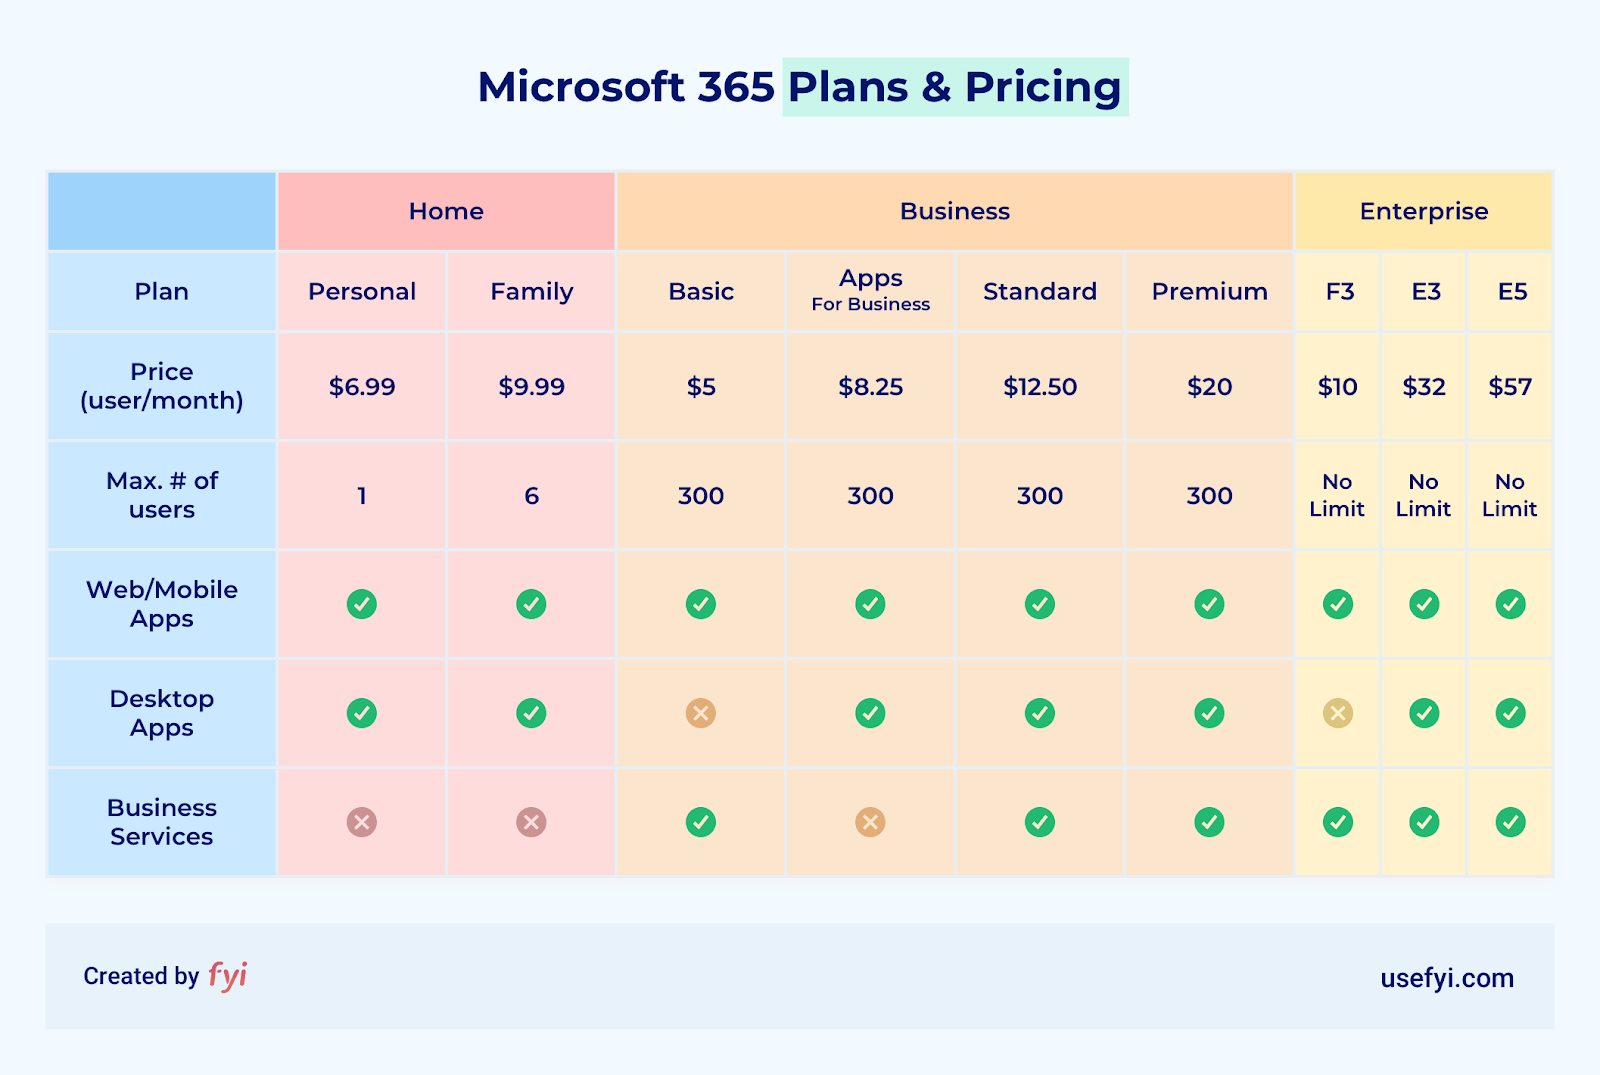 Microsoft 365 plans pricing